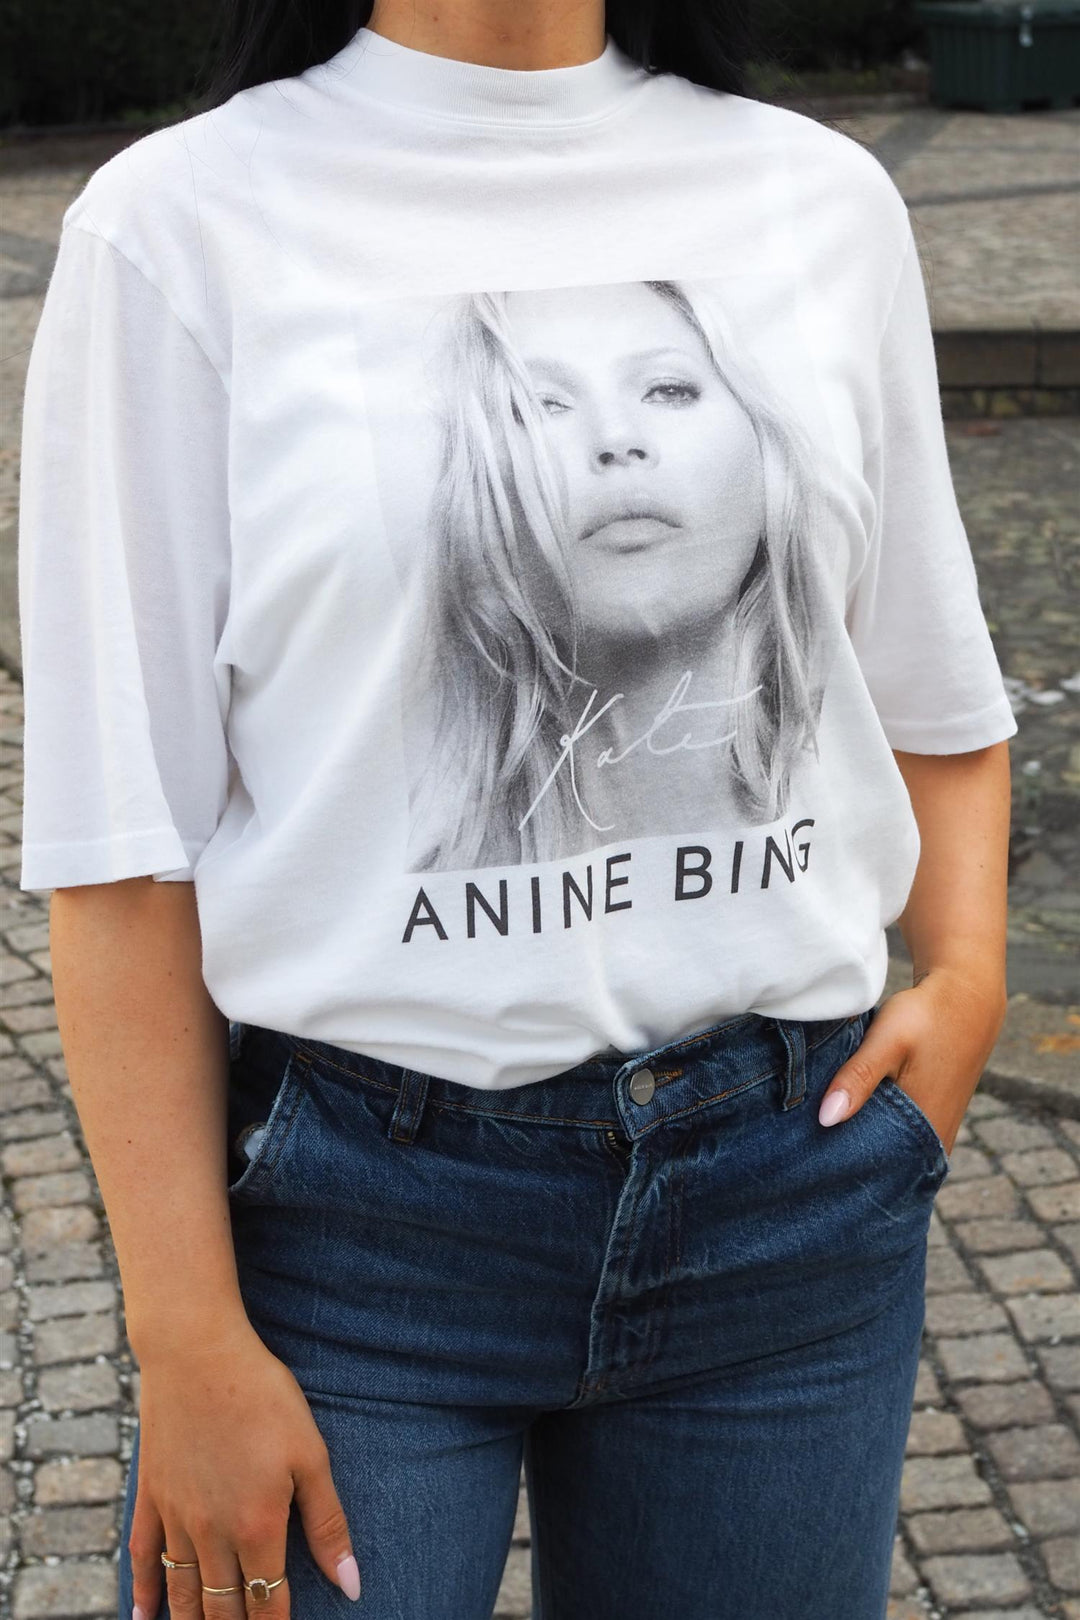 Anine Bing - Avi Tee Kate Moss